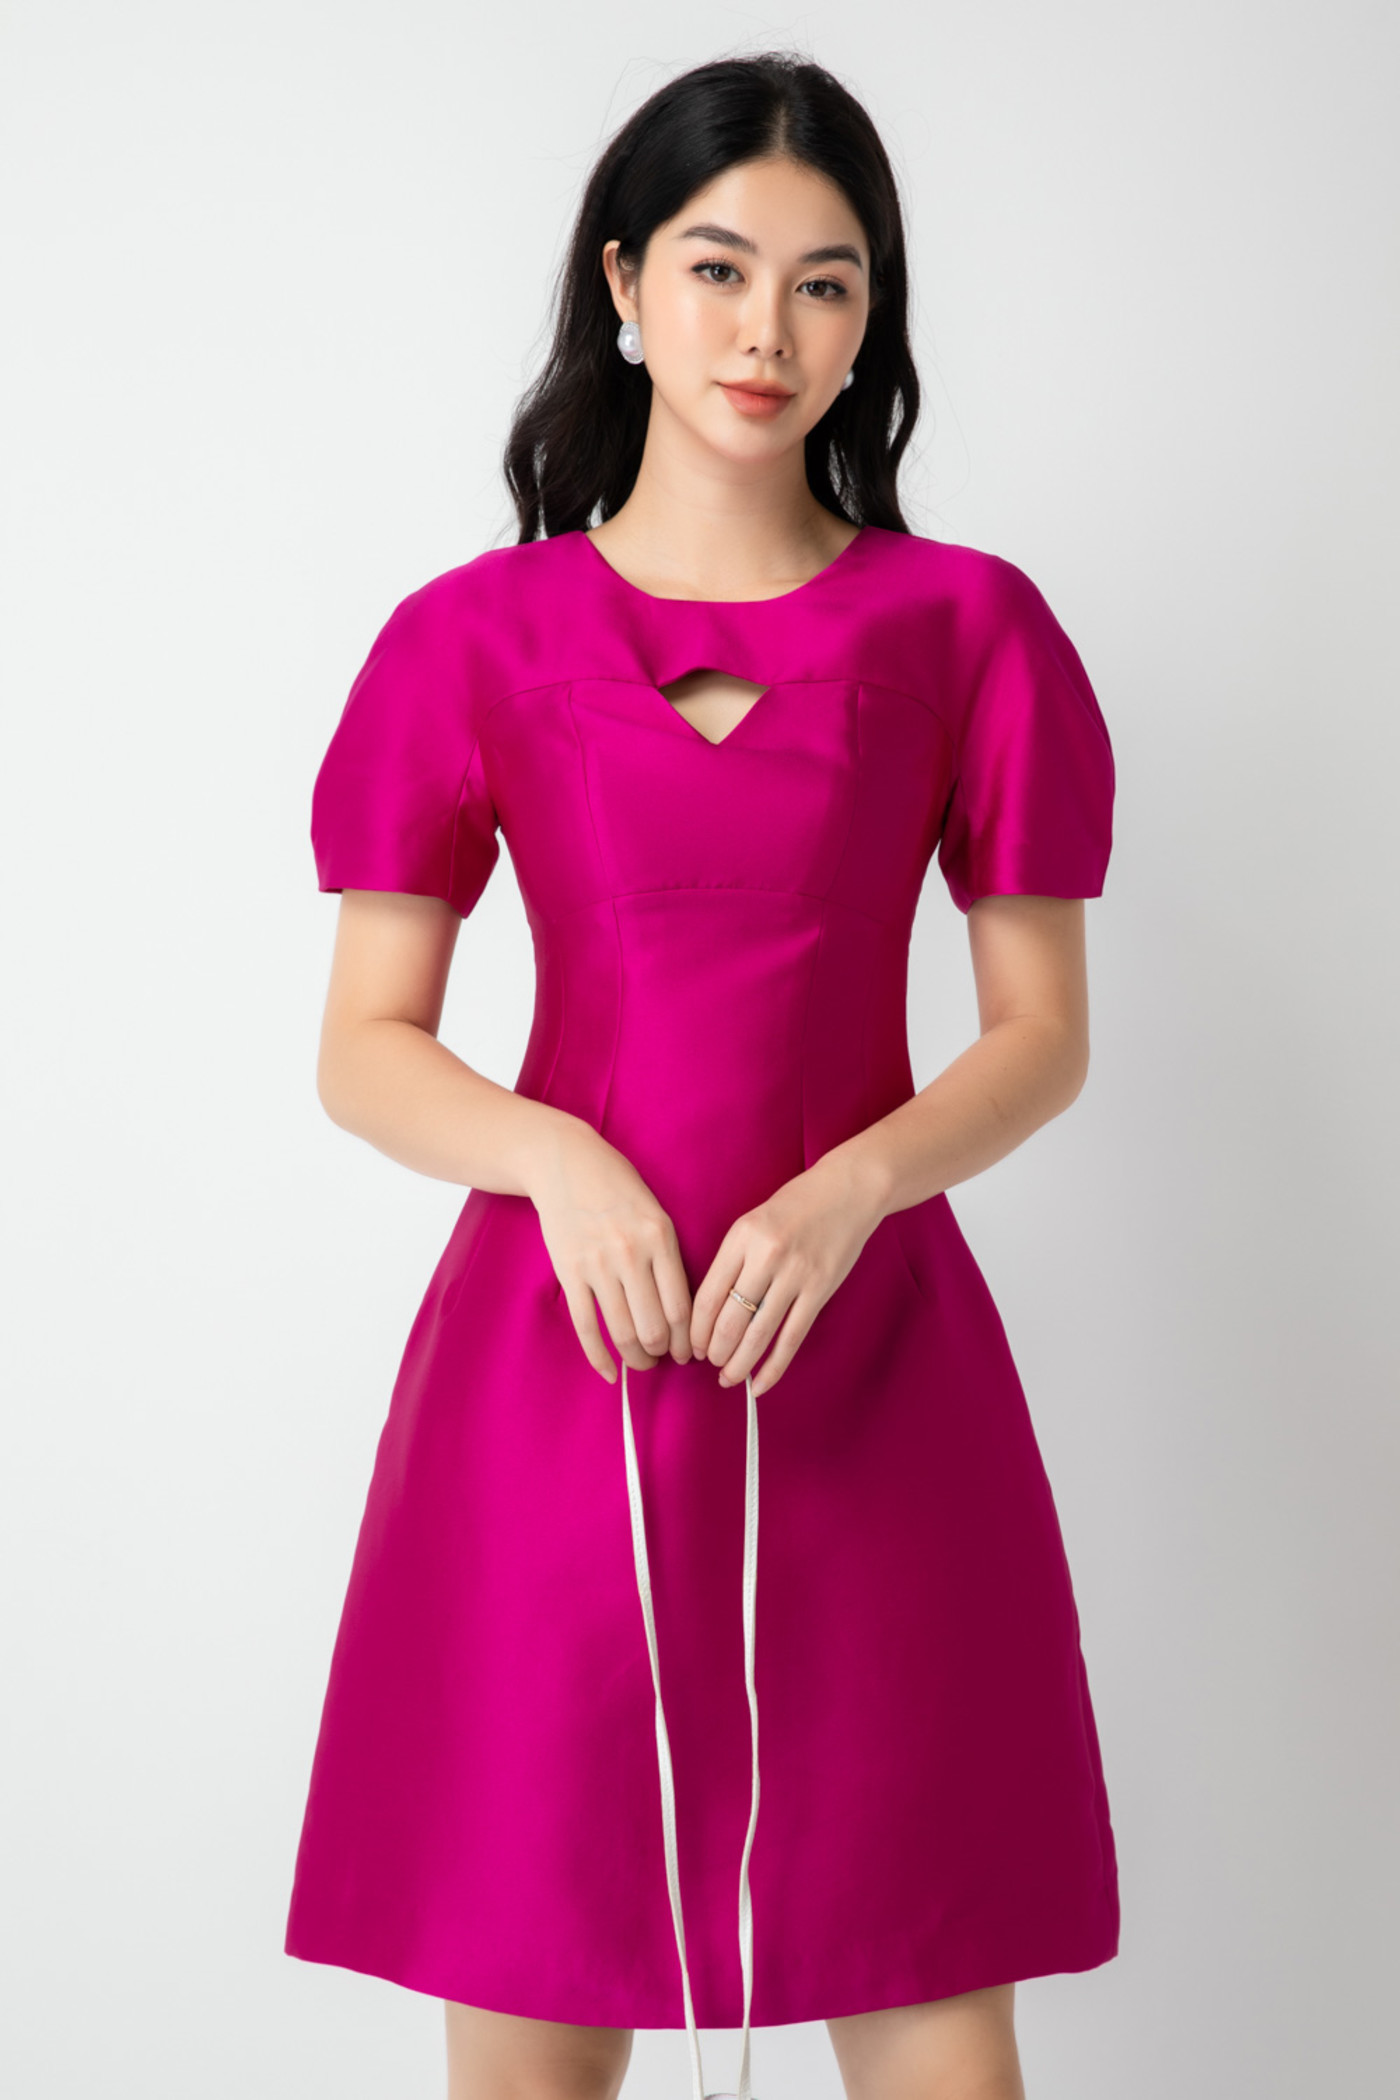 Đầm dạ hội cut-out vải Taffeta 